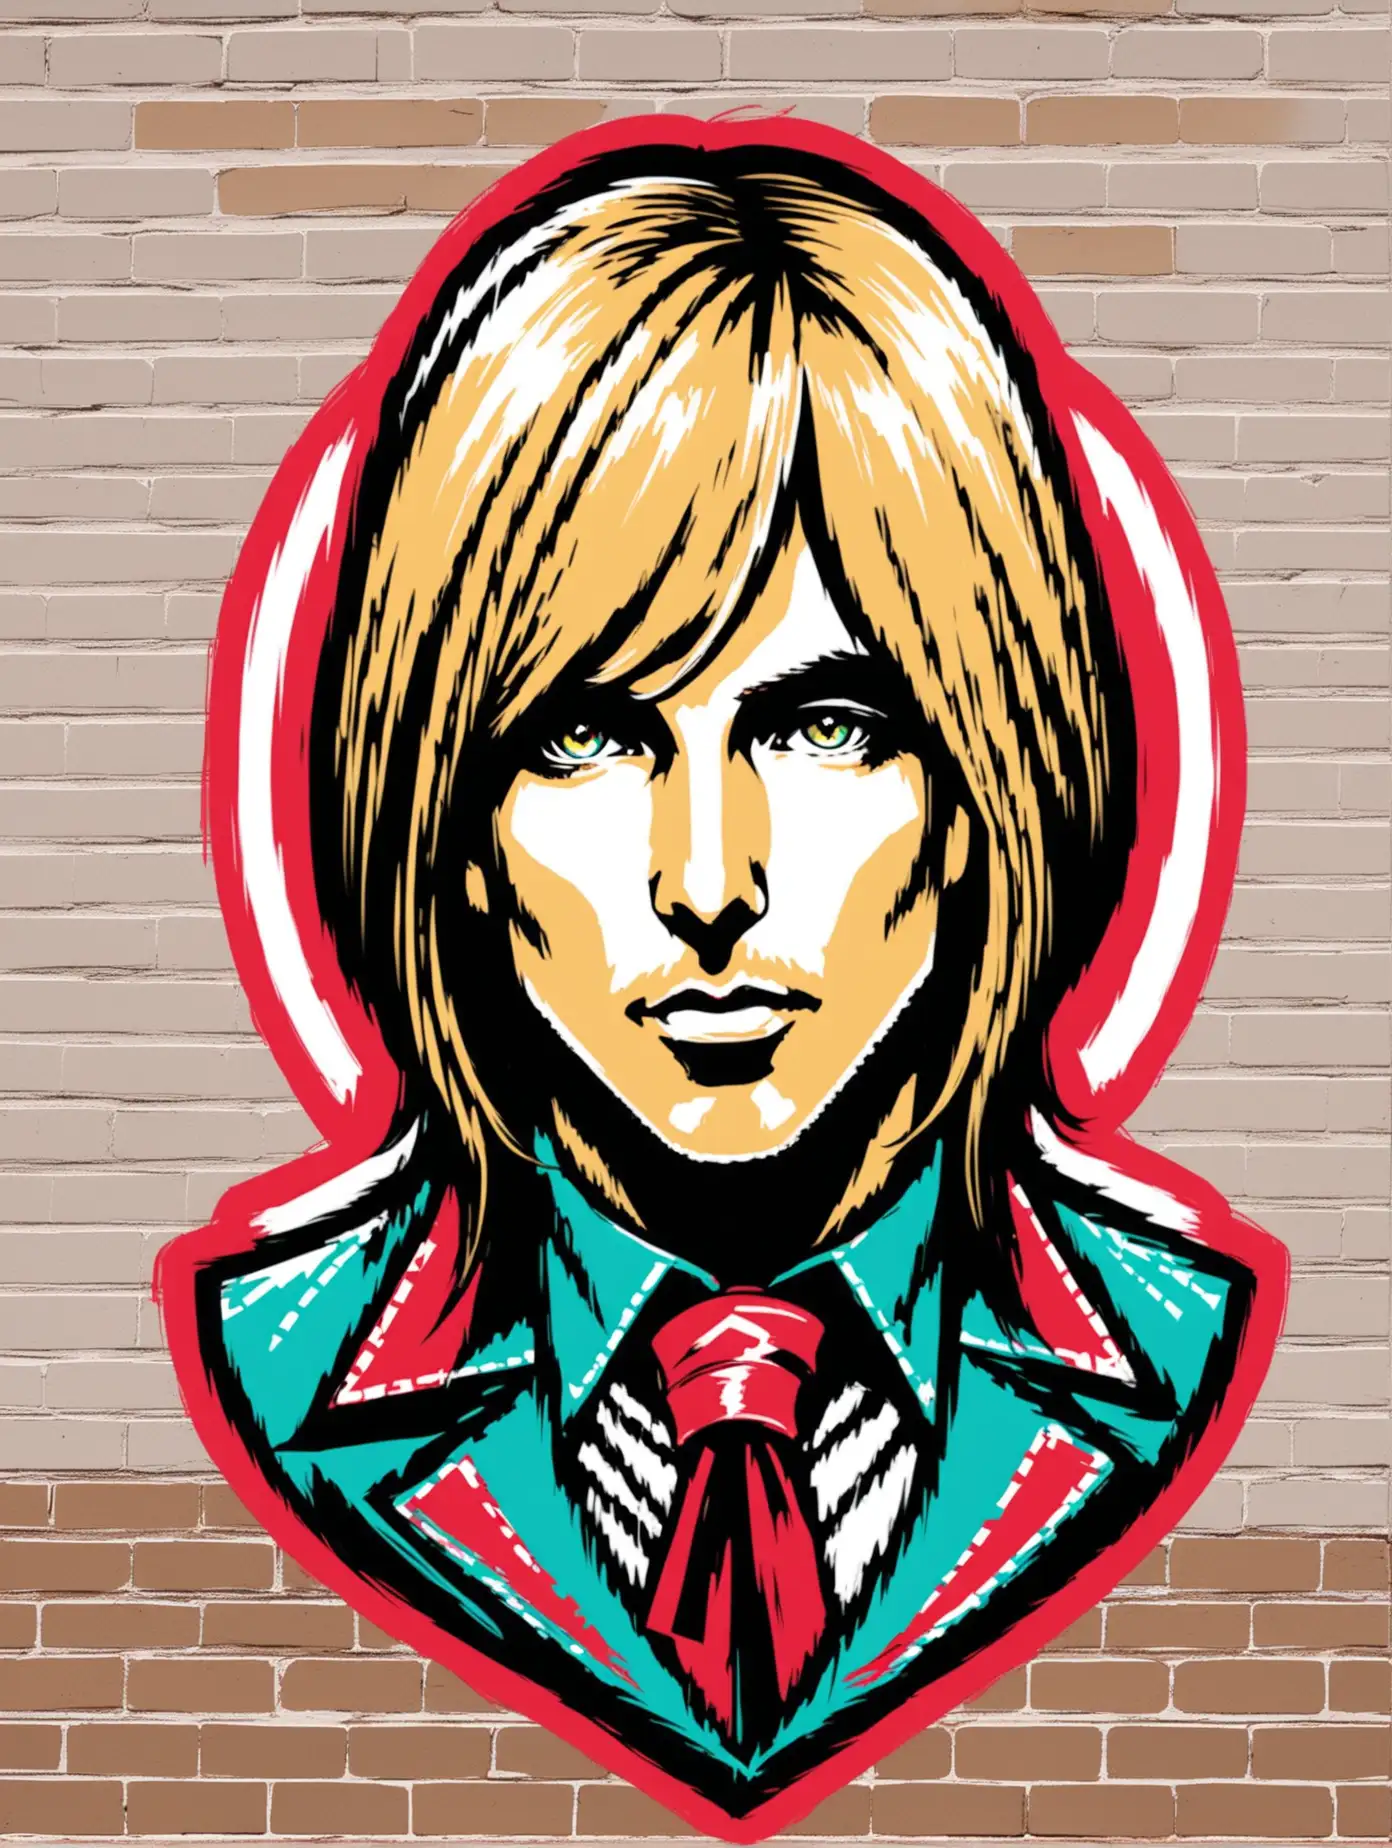 Tom Petty Portrait Bust Urban Street Art Style